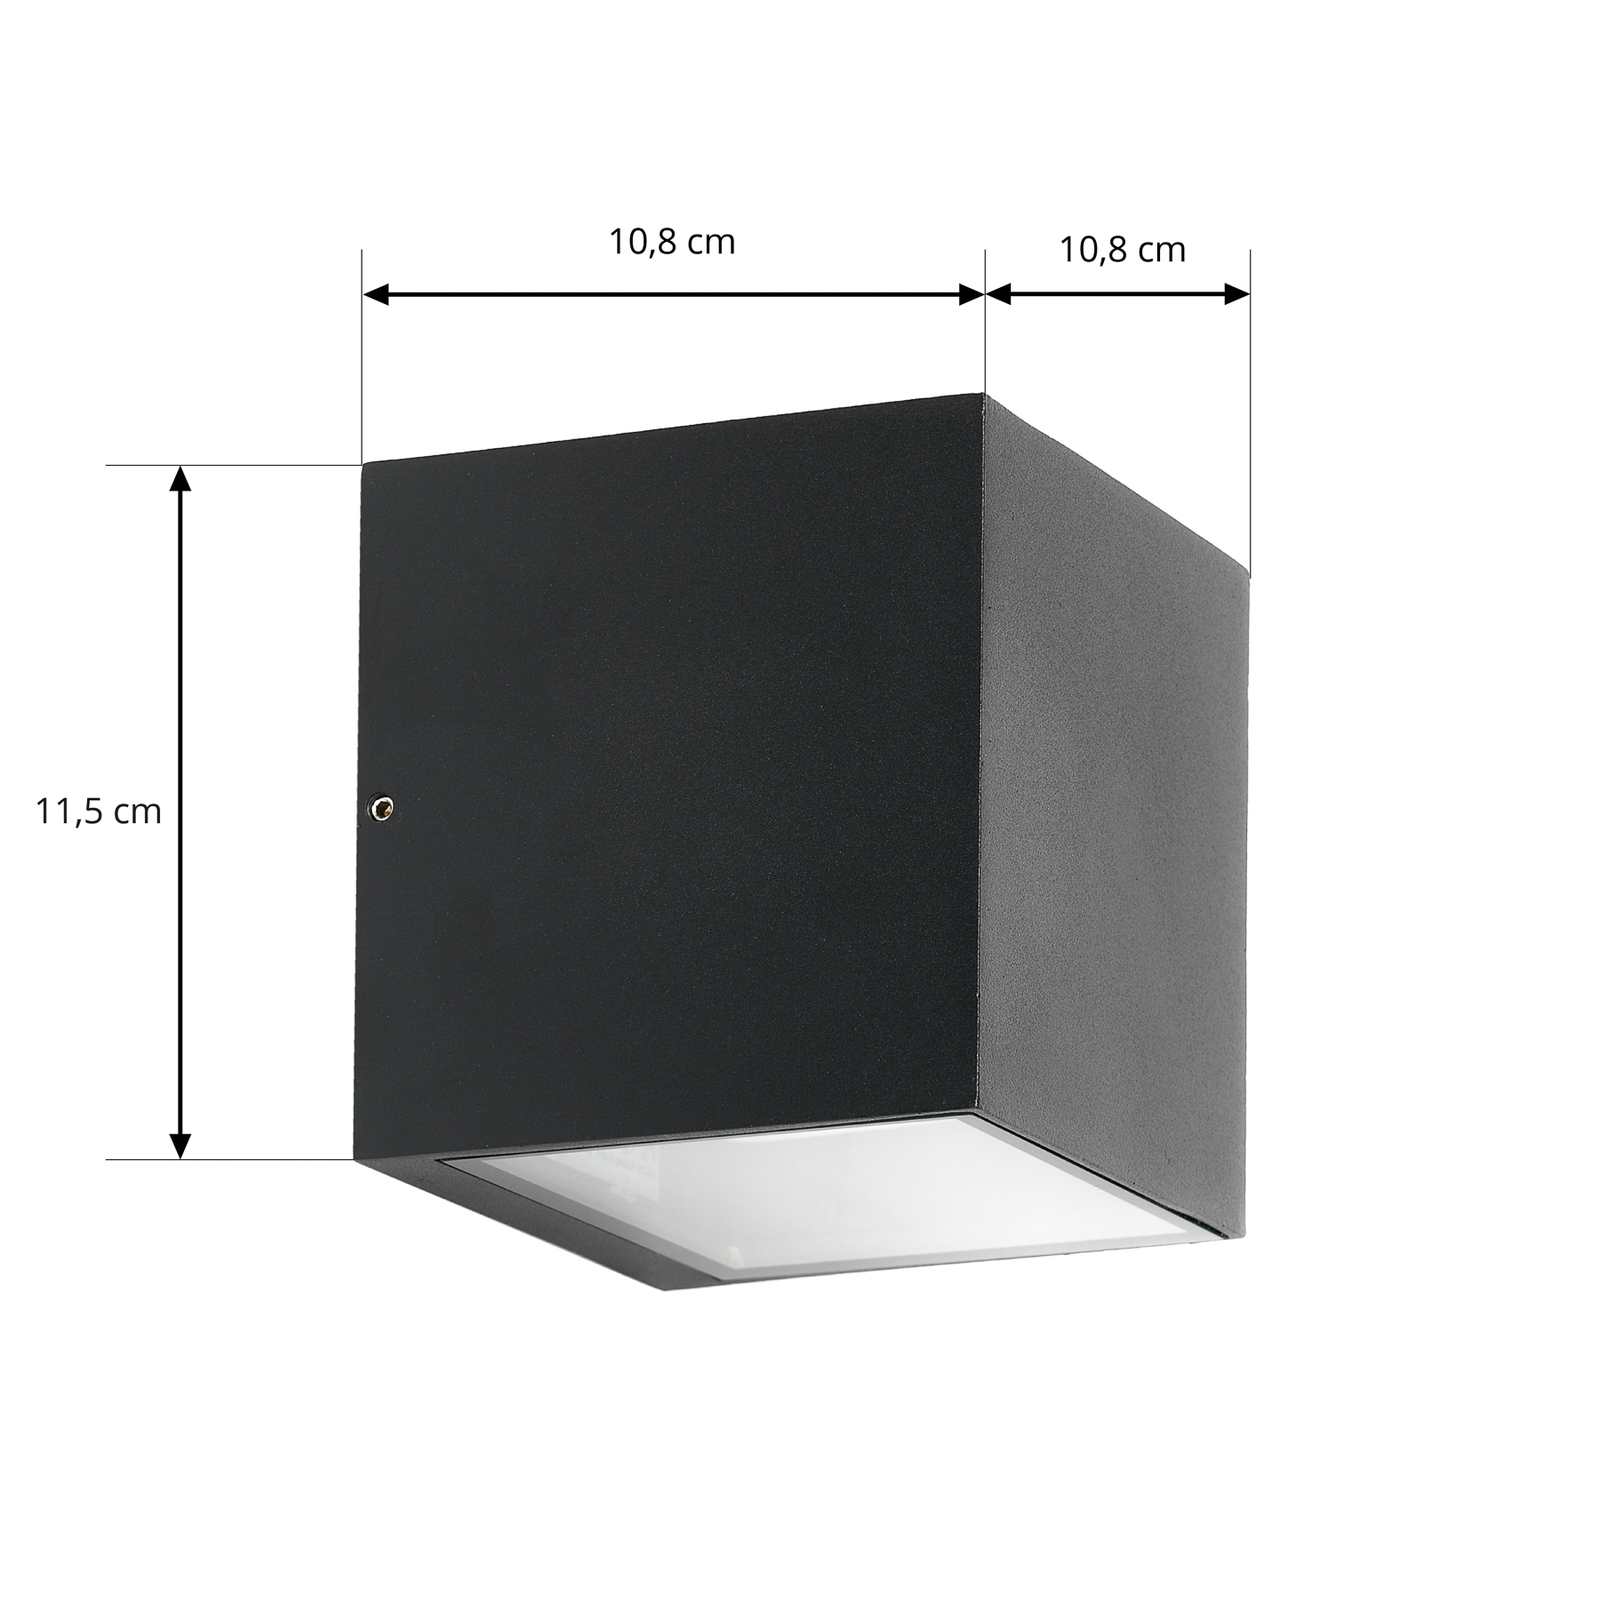 Prios outdoor wall light Tetje, black, angular, 11.5 cm, set of 2